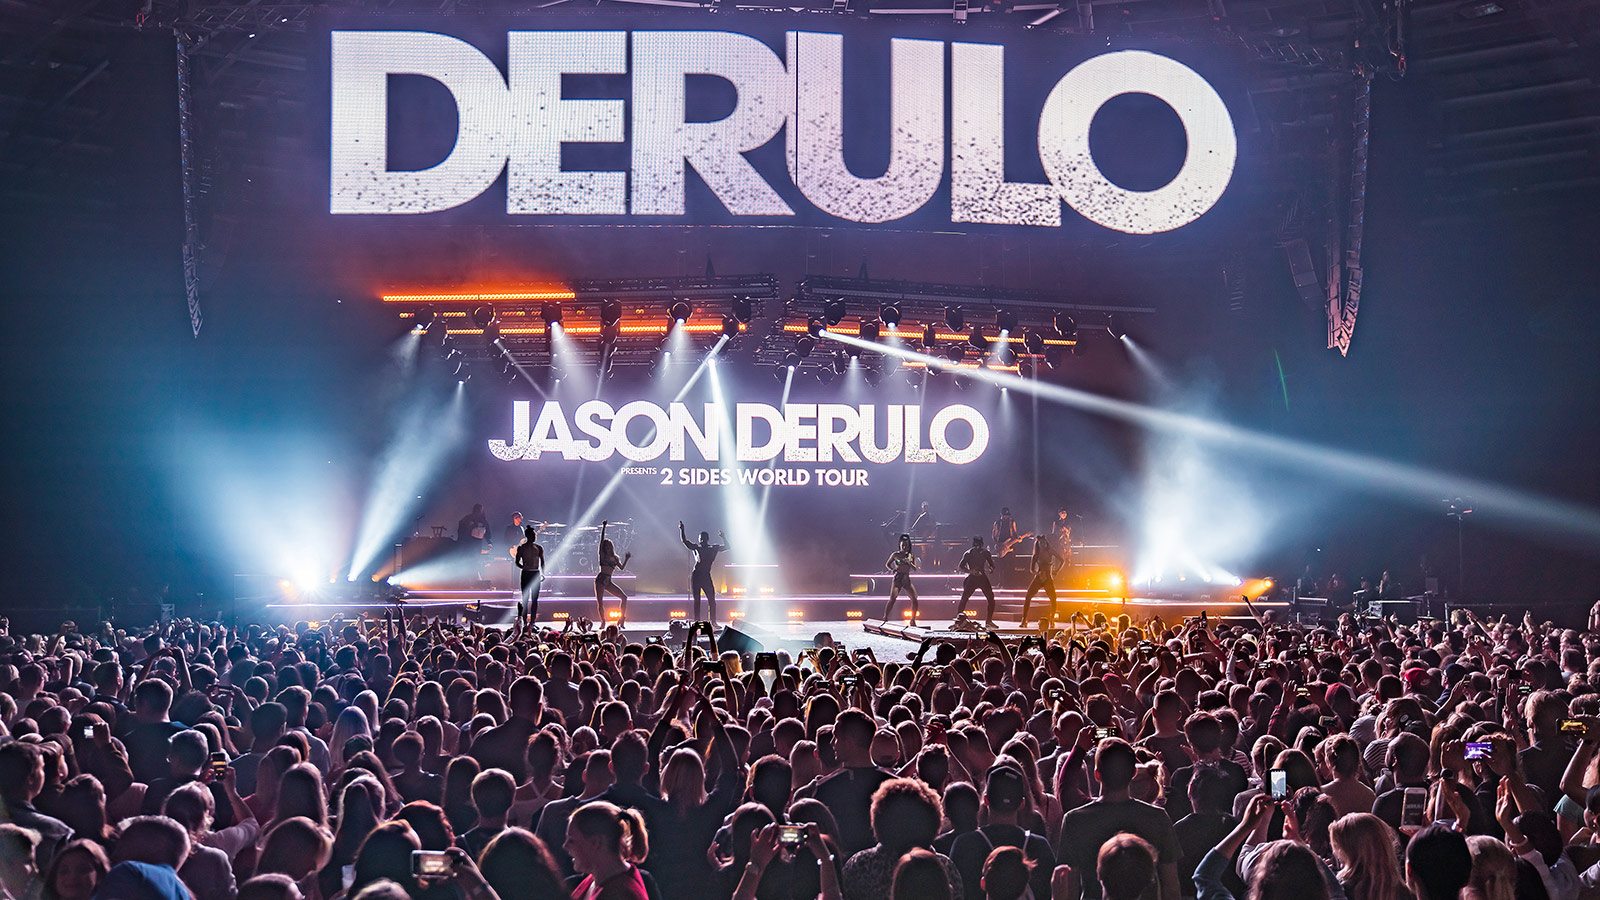 Global Superstar Jason Derulo Delivers High-Energy “2Sides World Tour” Across Europe Using Wigwam Acoustics’ Meyer Sound LEO Family Rig